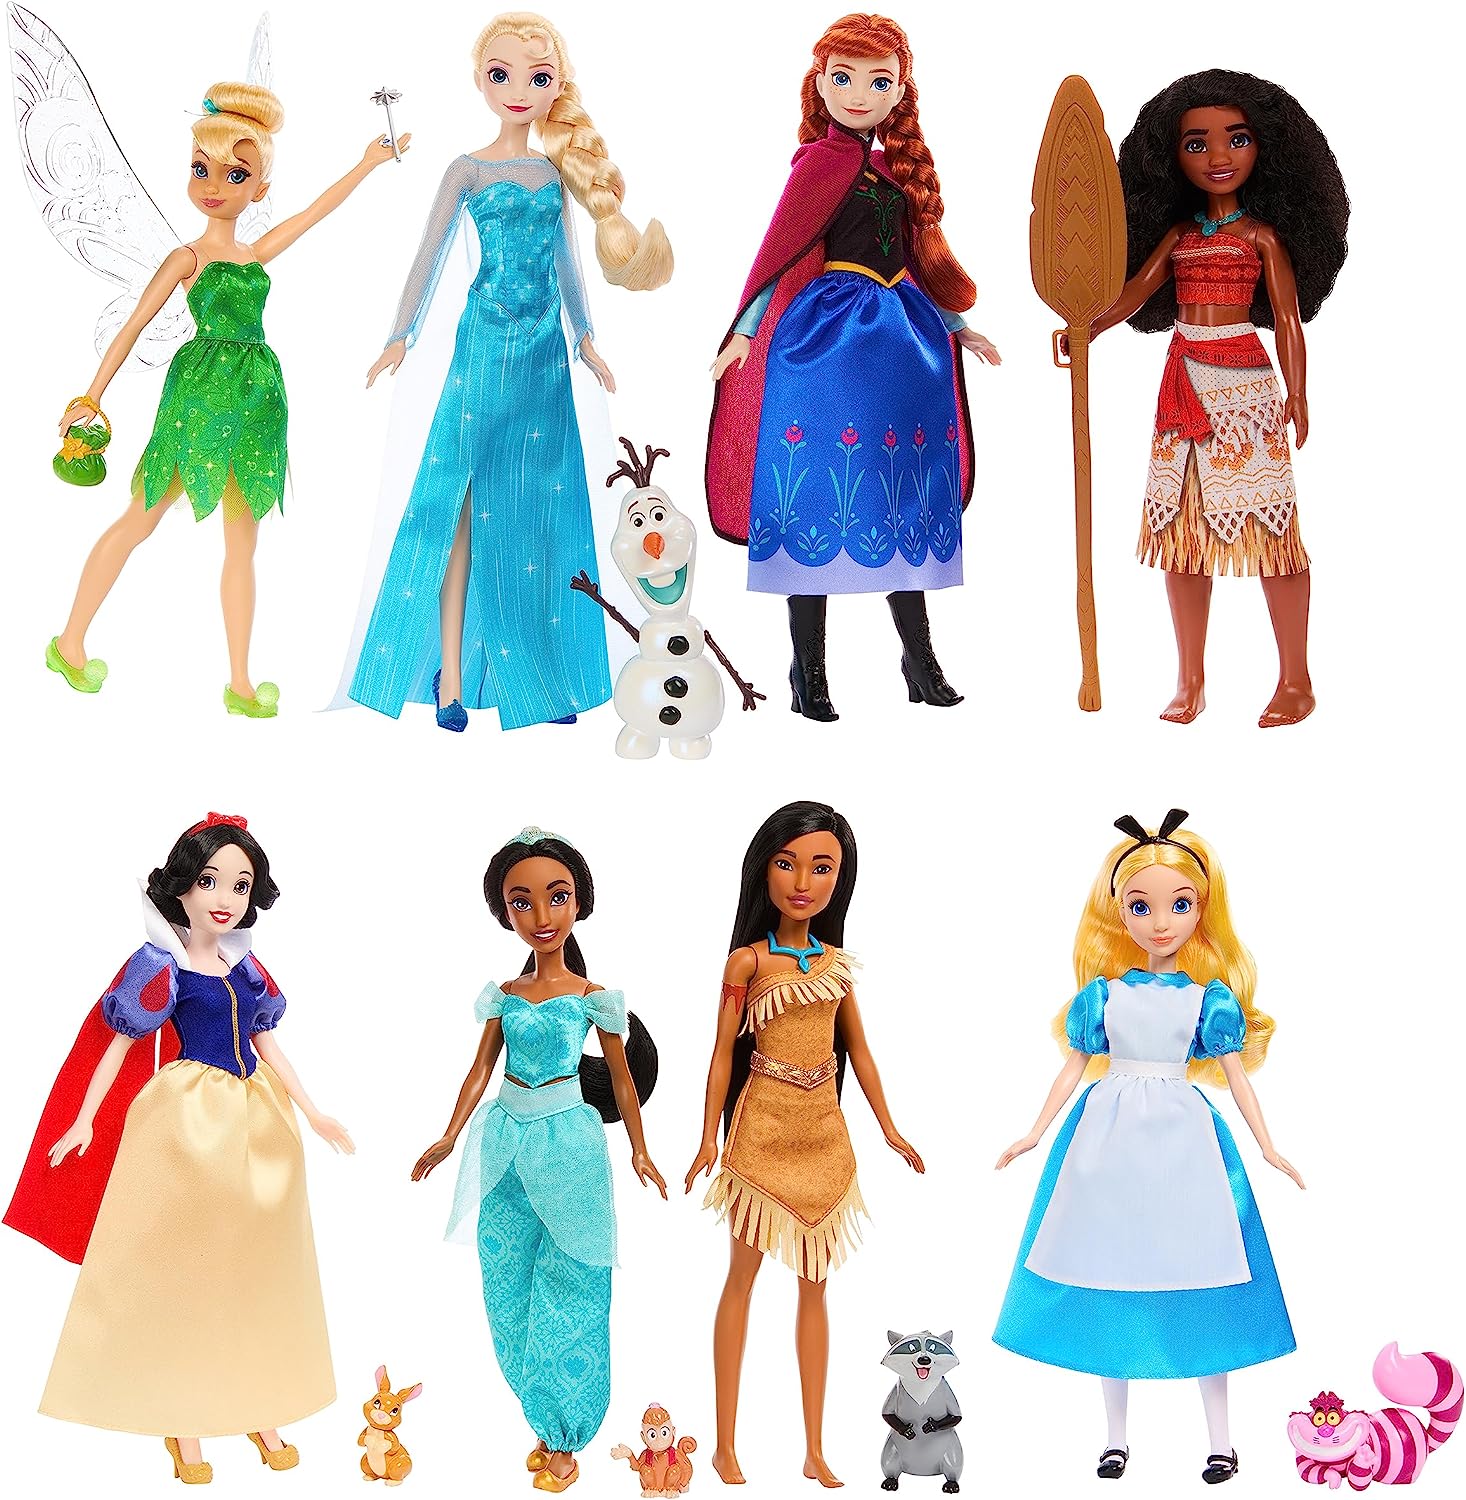 Disney Store Limited Alice in Wonderland Figure Set Deluxe